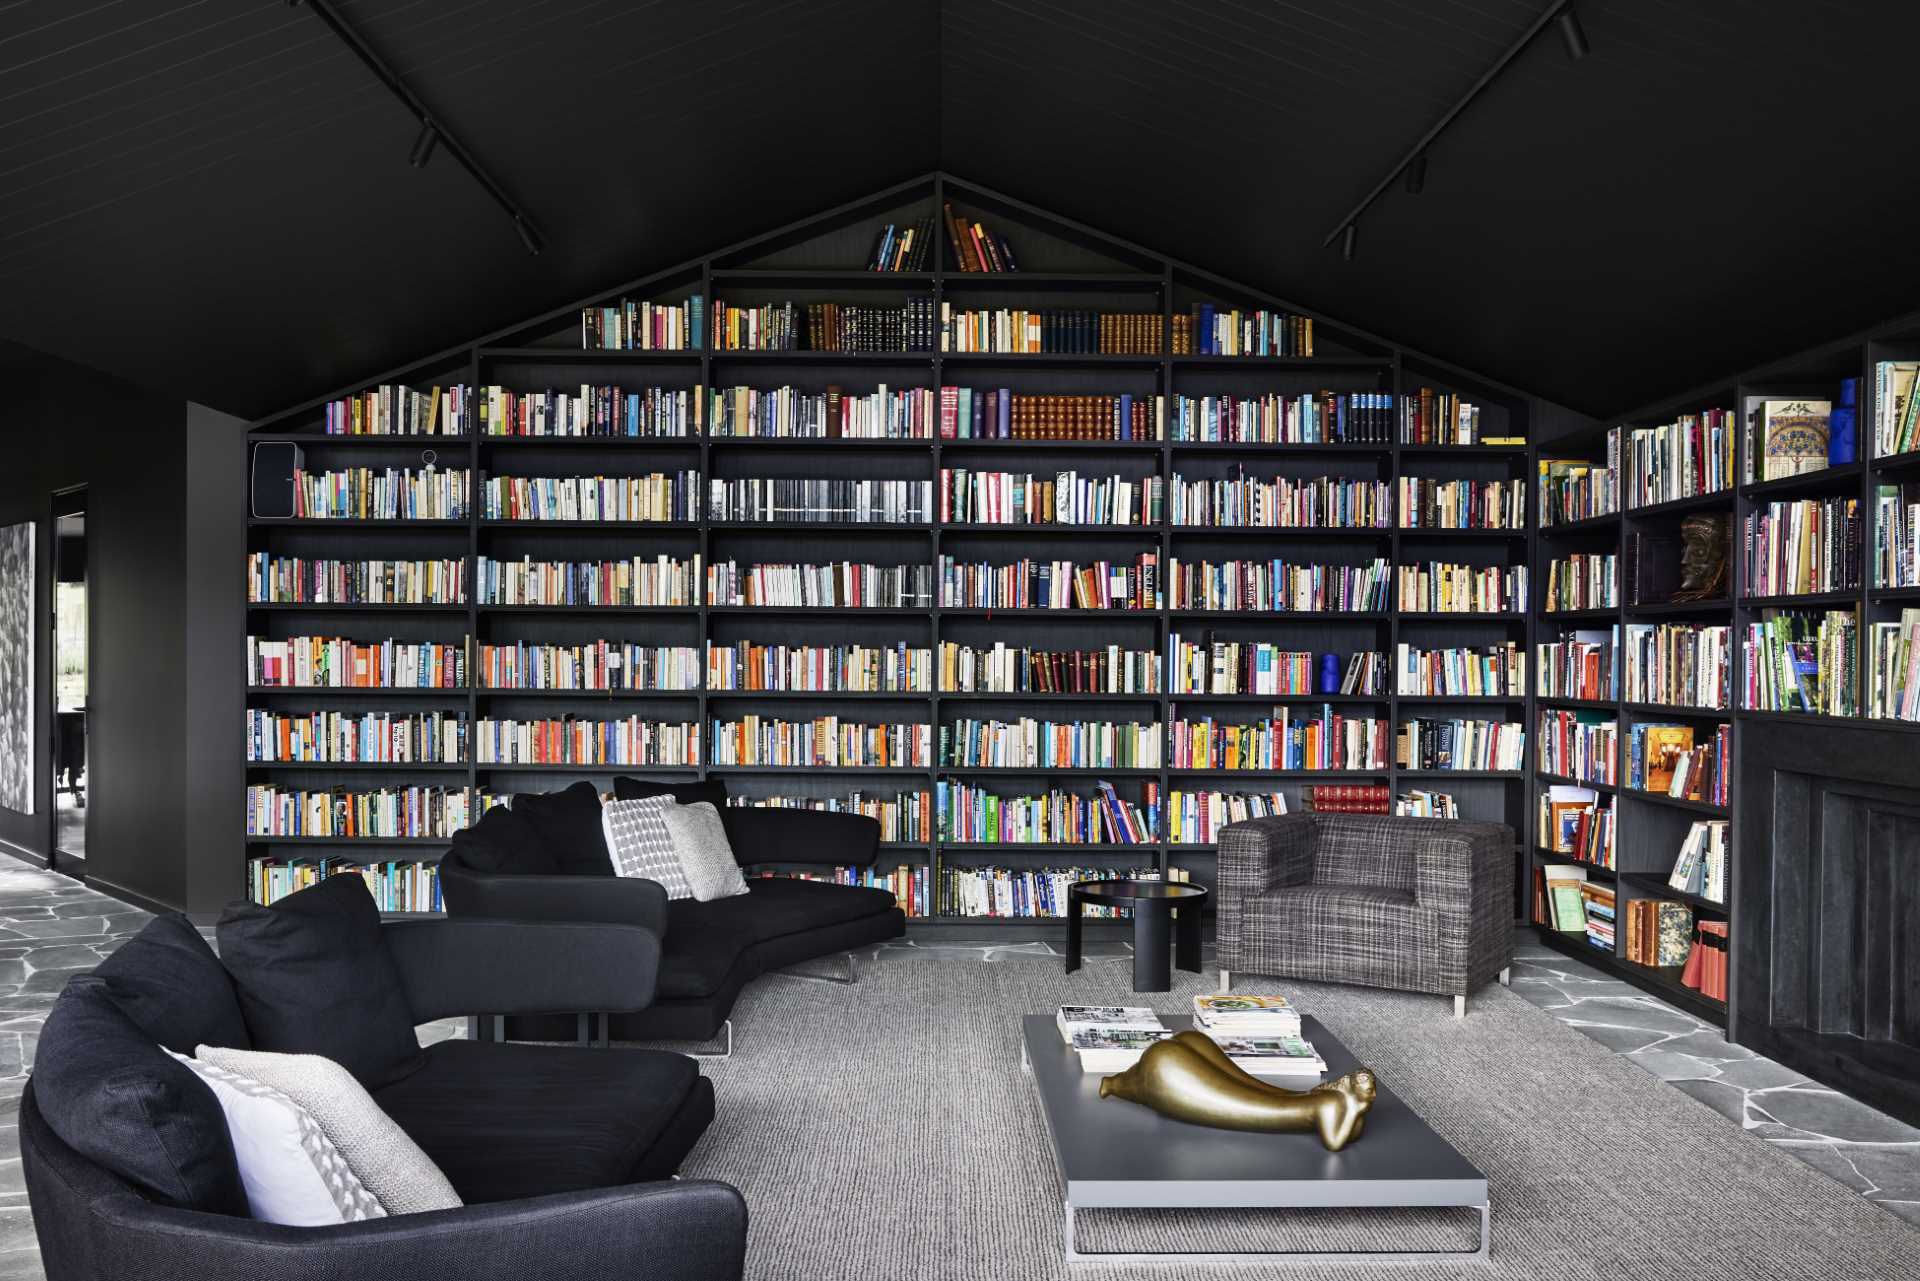 A modern living room with an abundance of bookshelves and a fireplace.